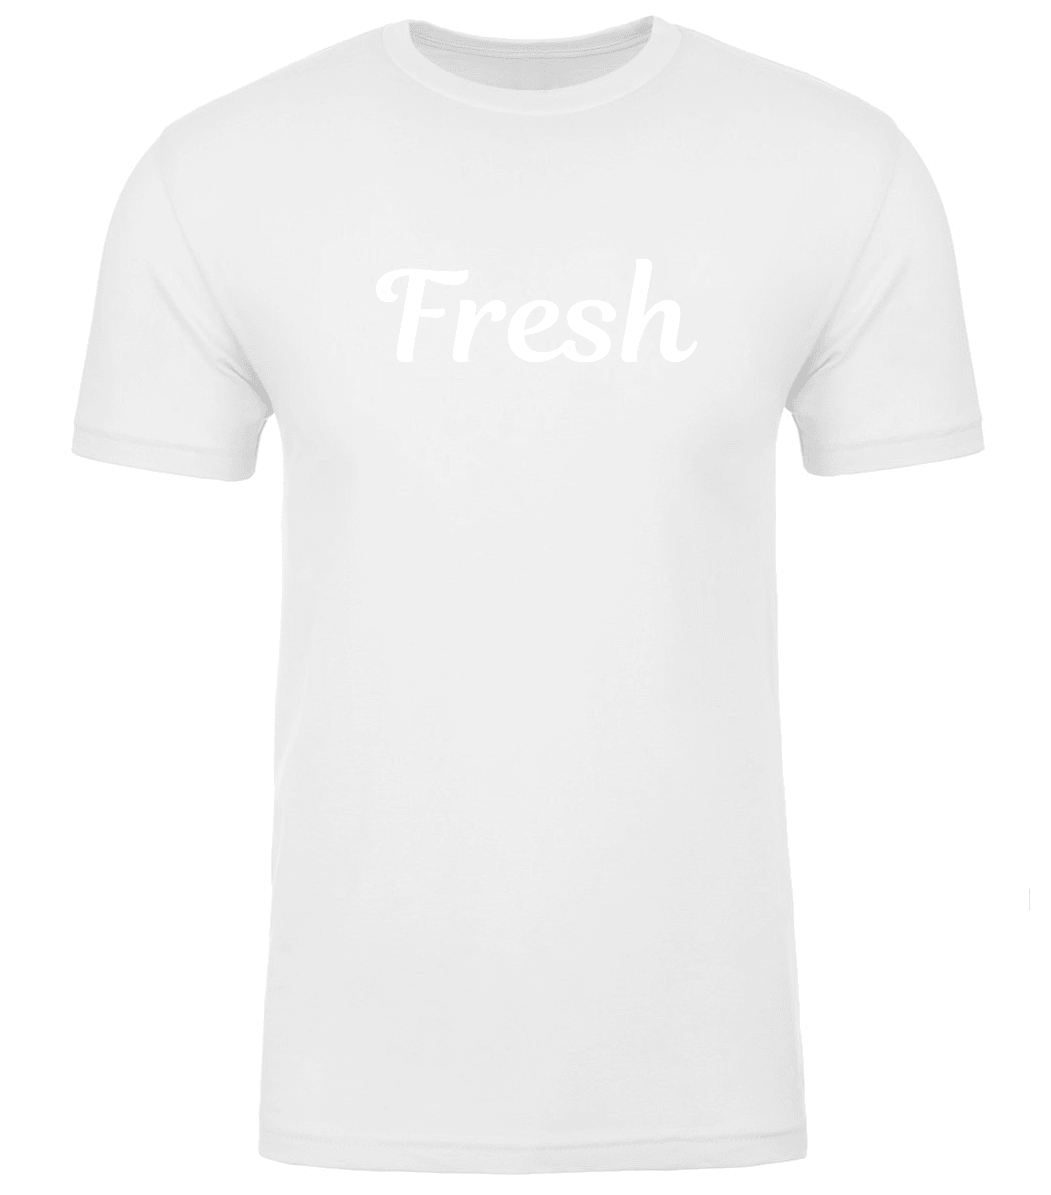 Fresh Shirt - Your Creatives Inc